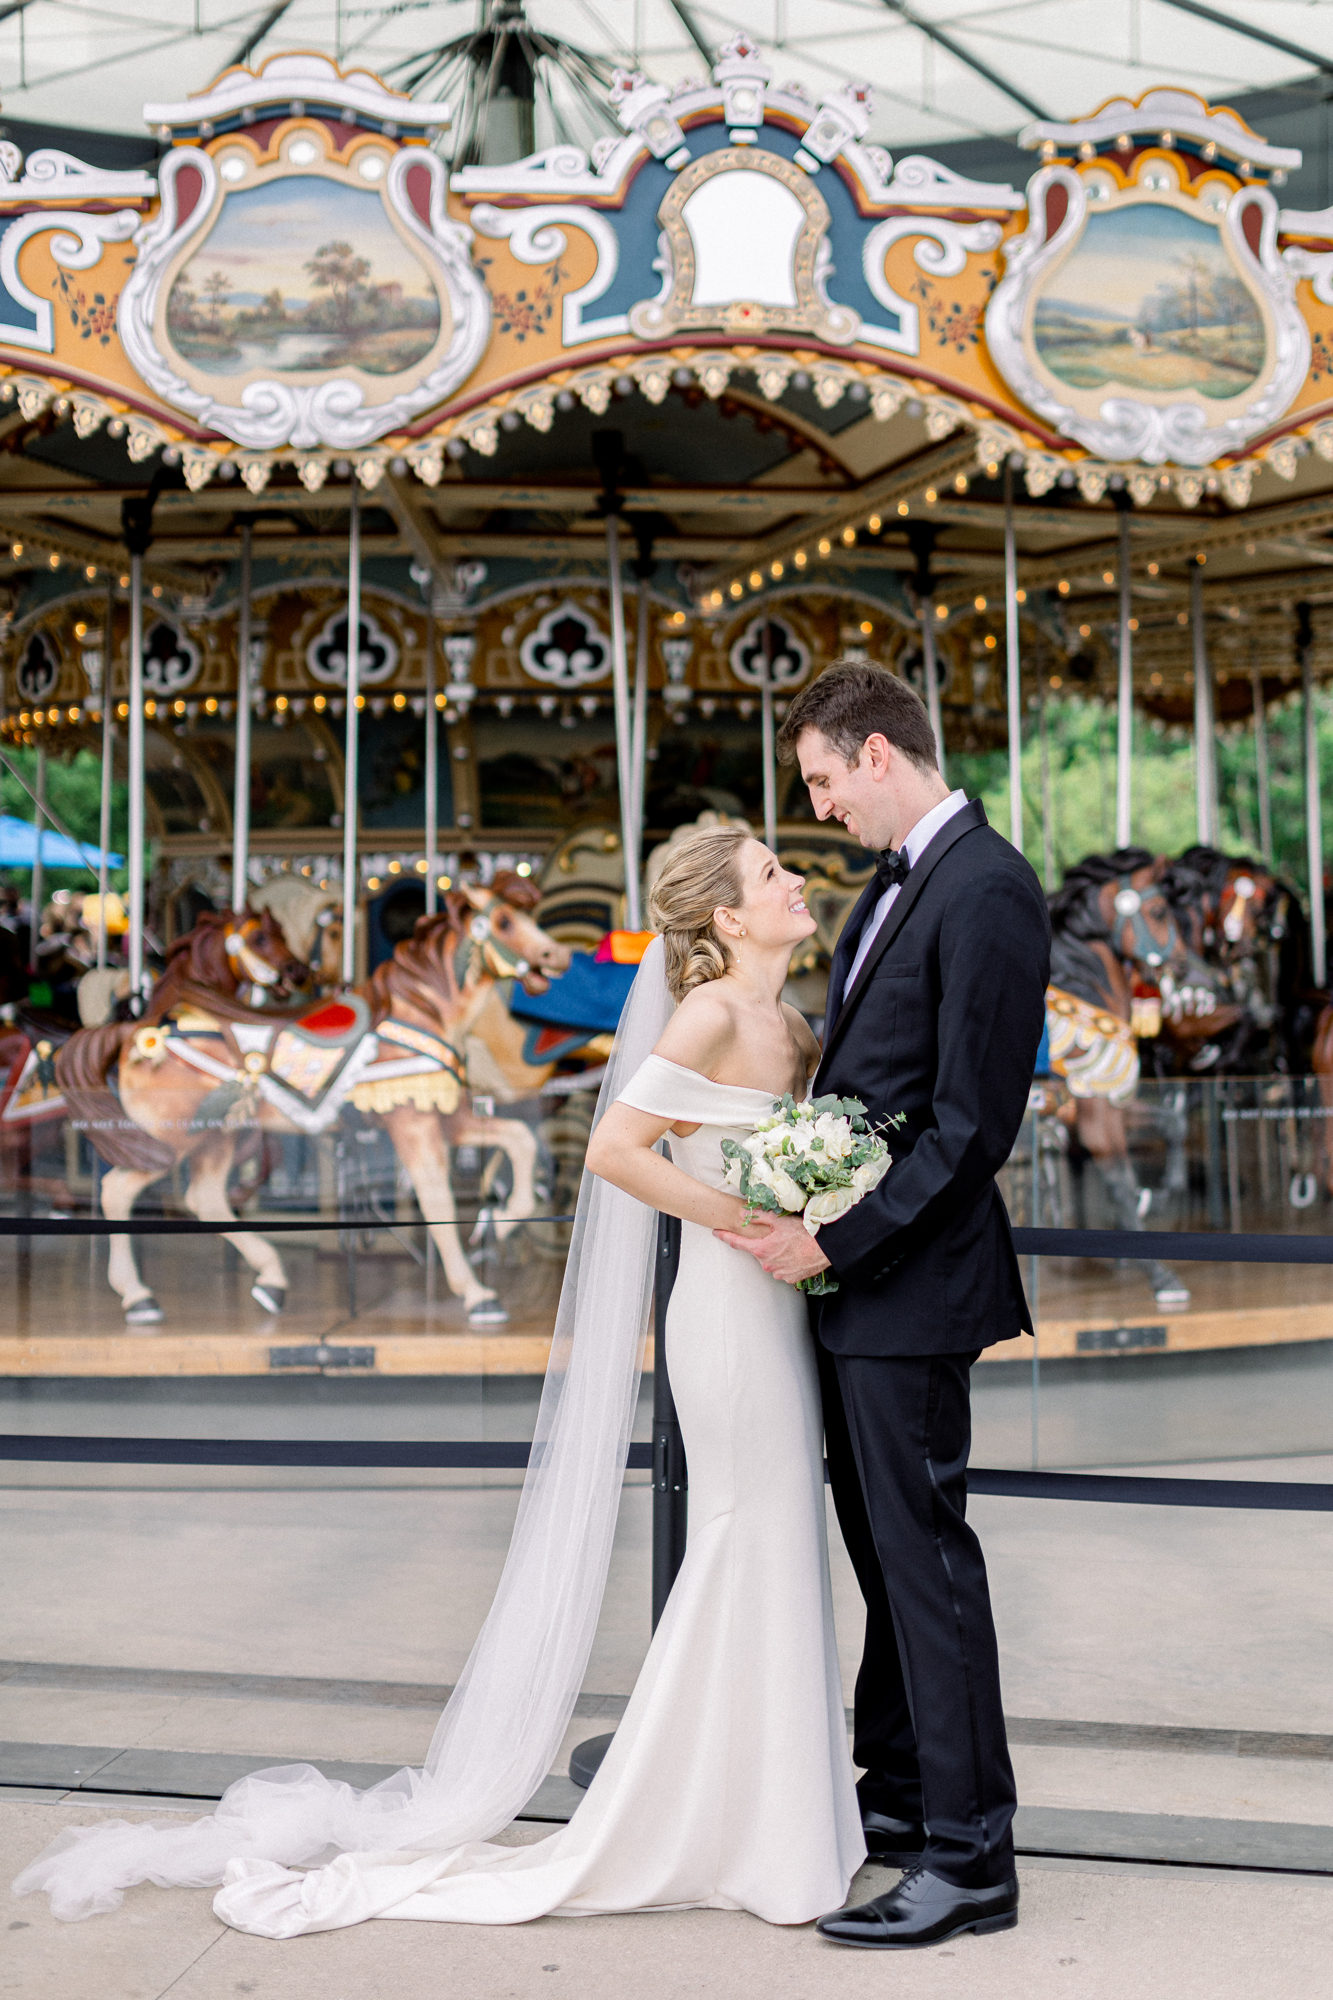 Gorgeous Intimate Carousel Wedding in Dumbo